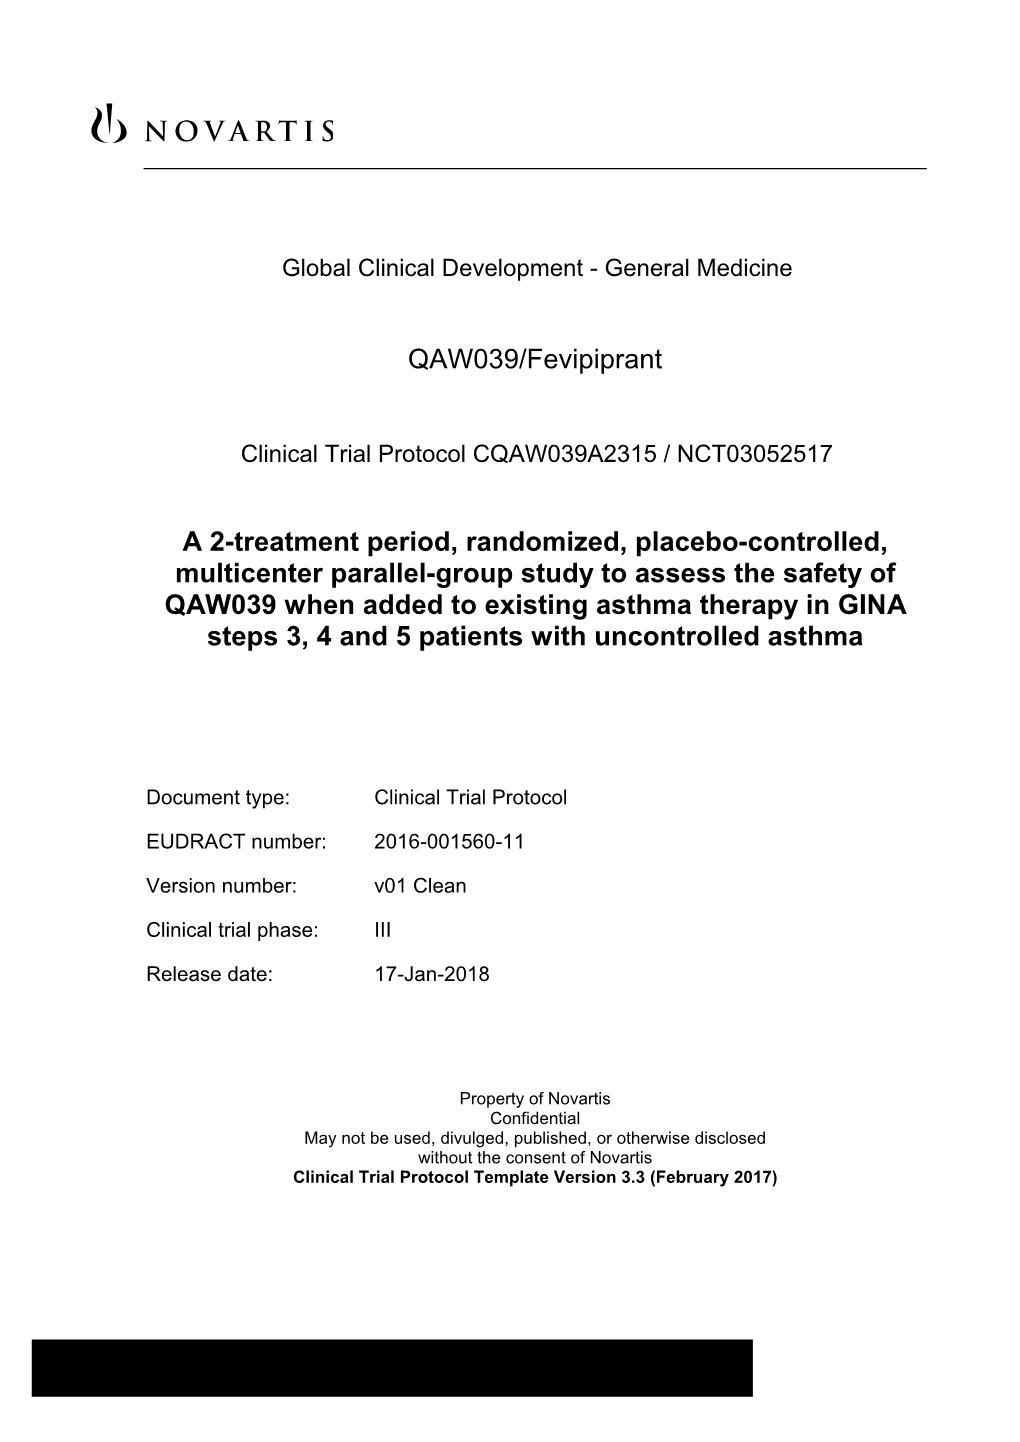 QAW039/Fevipiprant a 2-Treatment Period, Randomized, Placebo